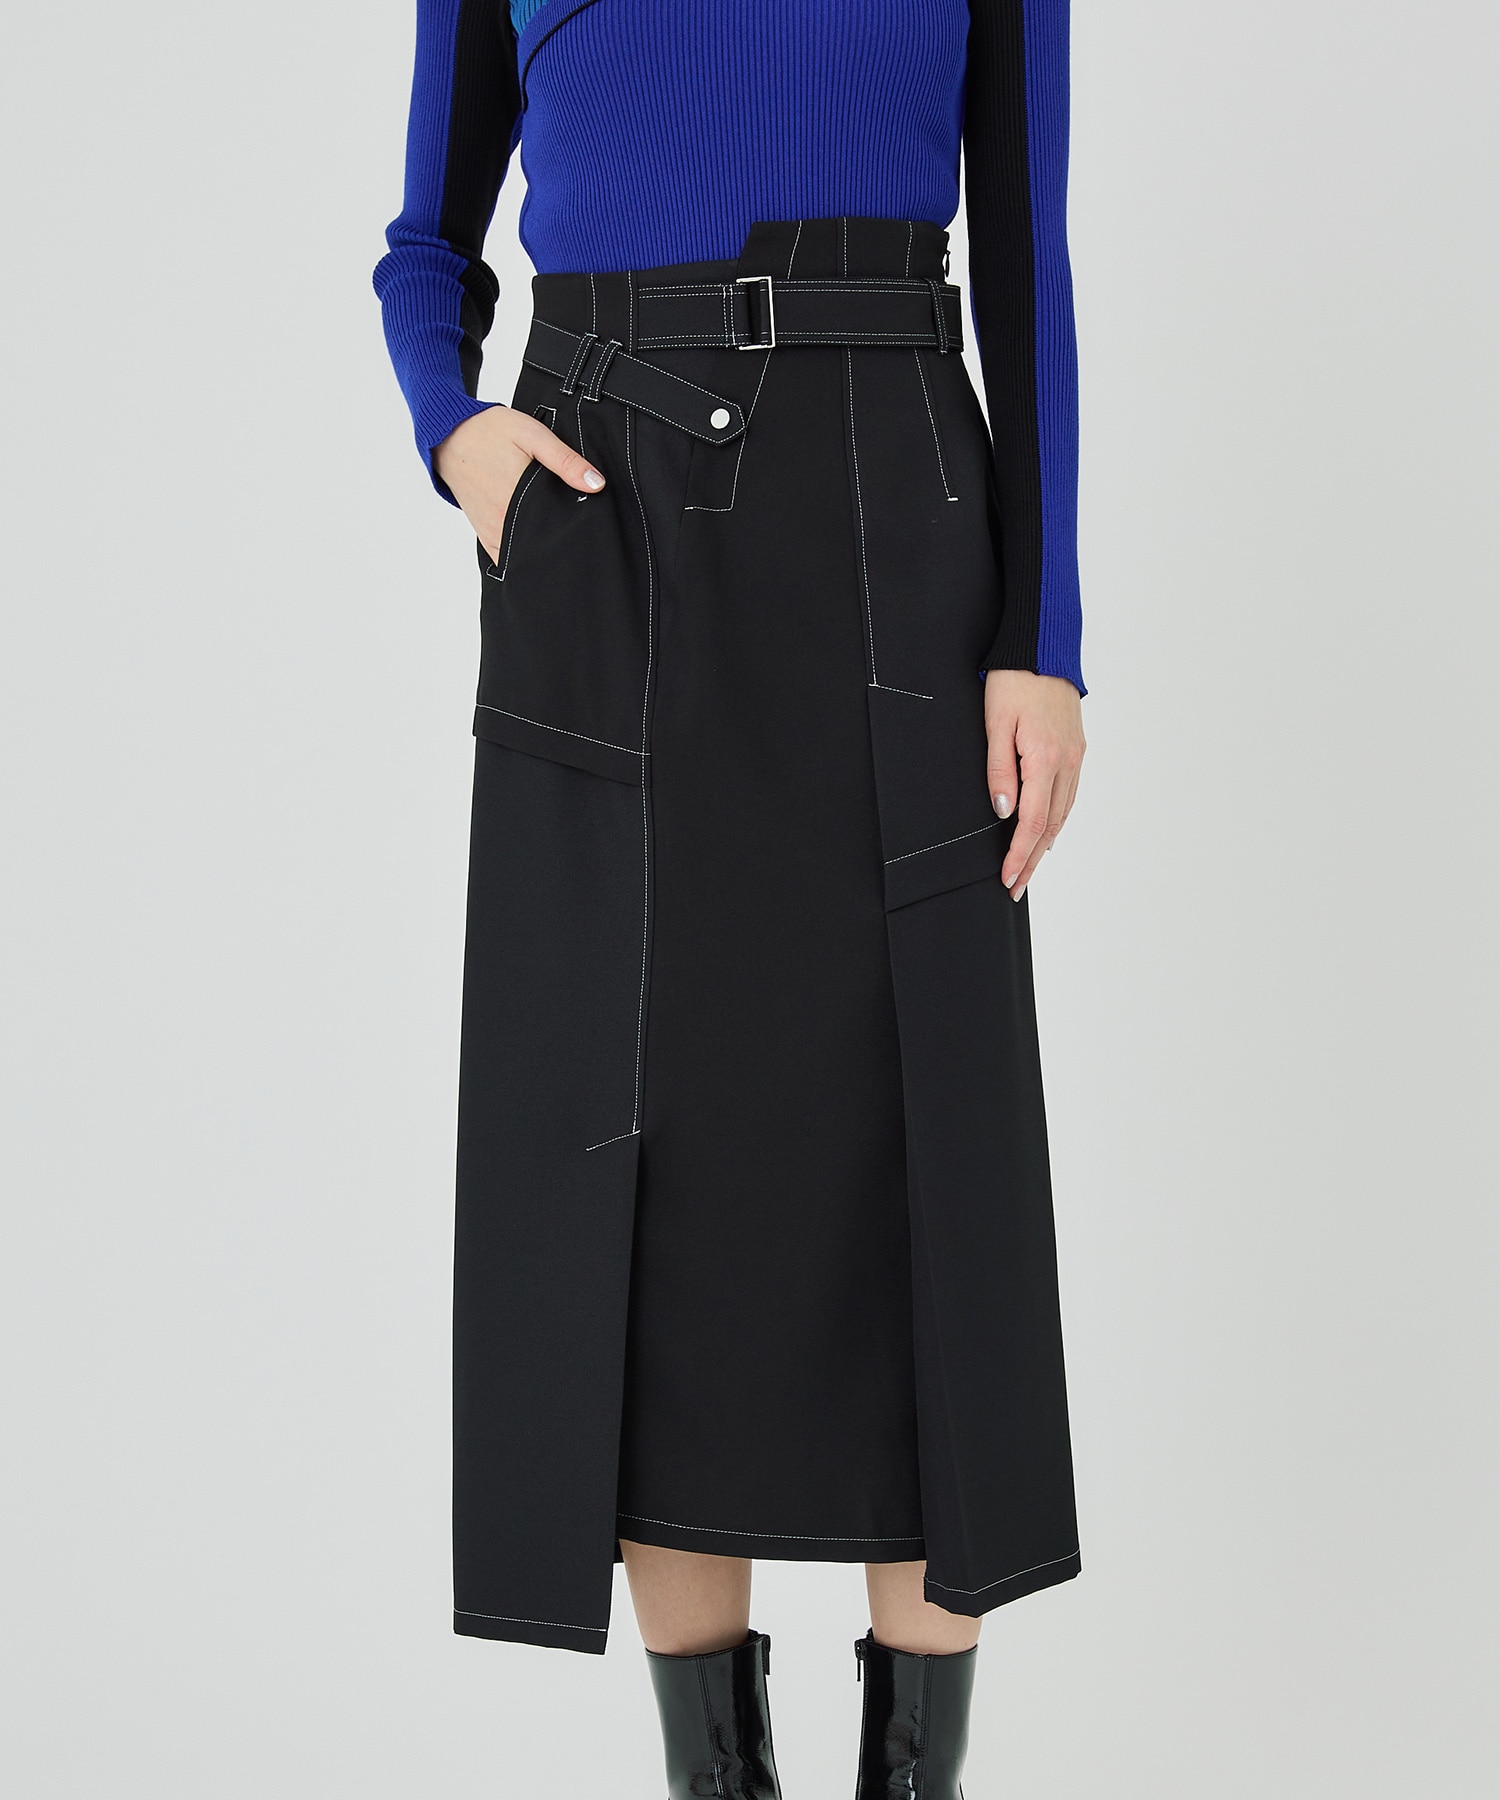 Sacaiバイカラータイトスカート オンラインストアファッション www